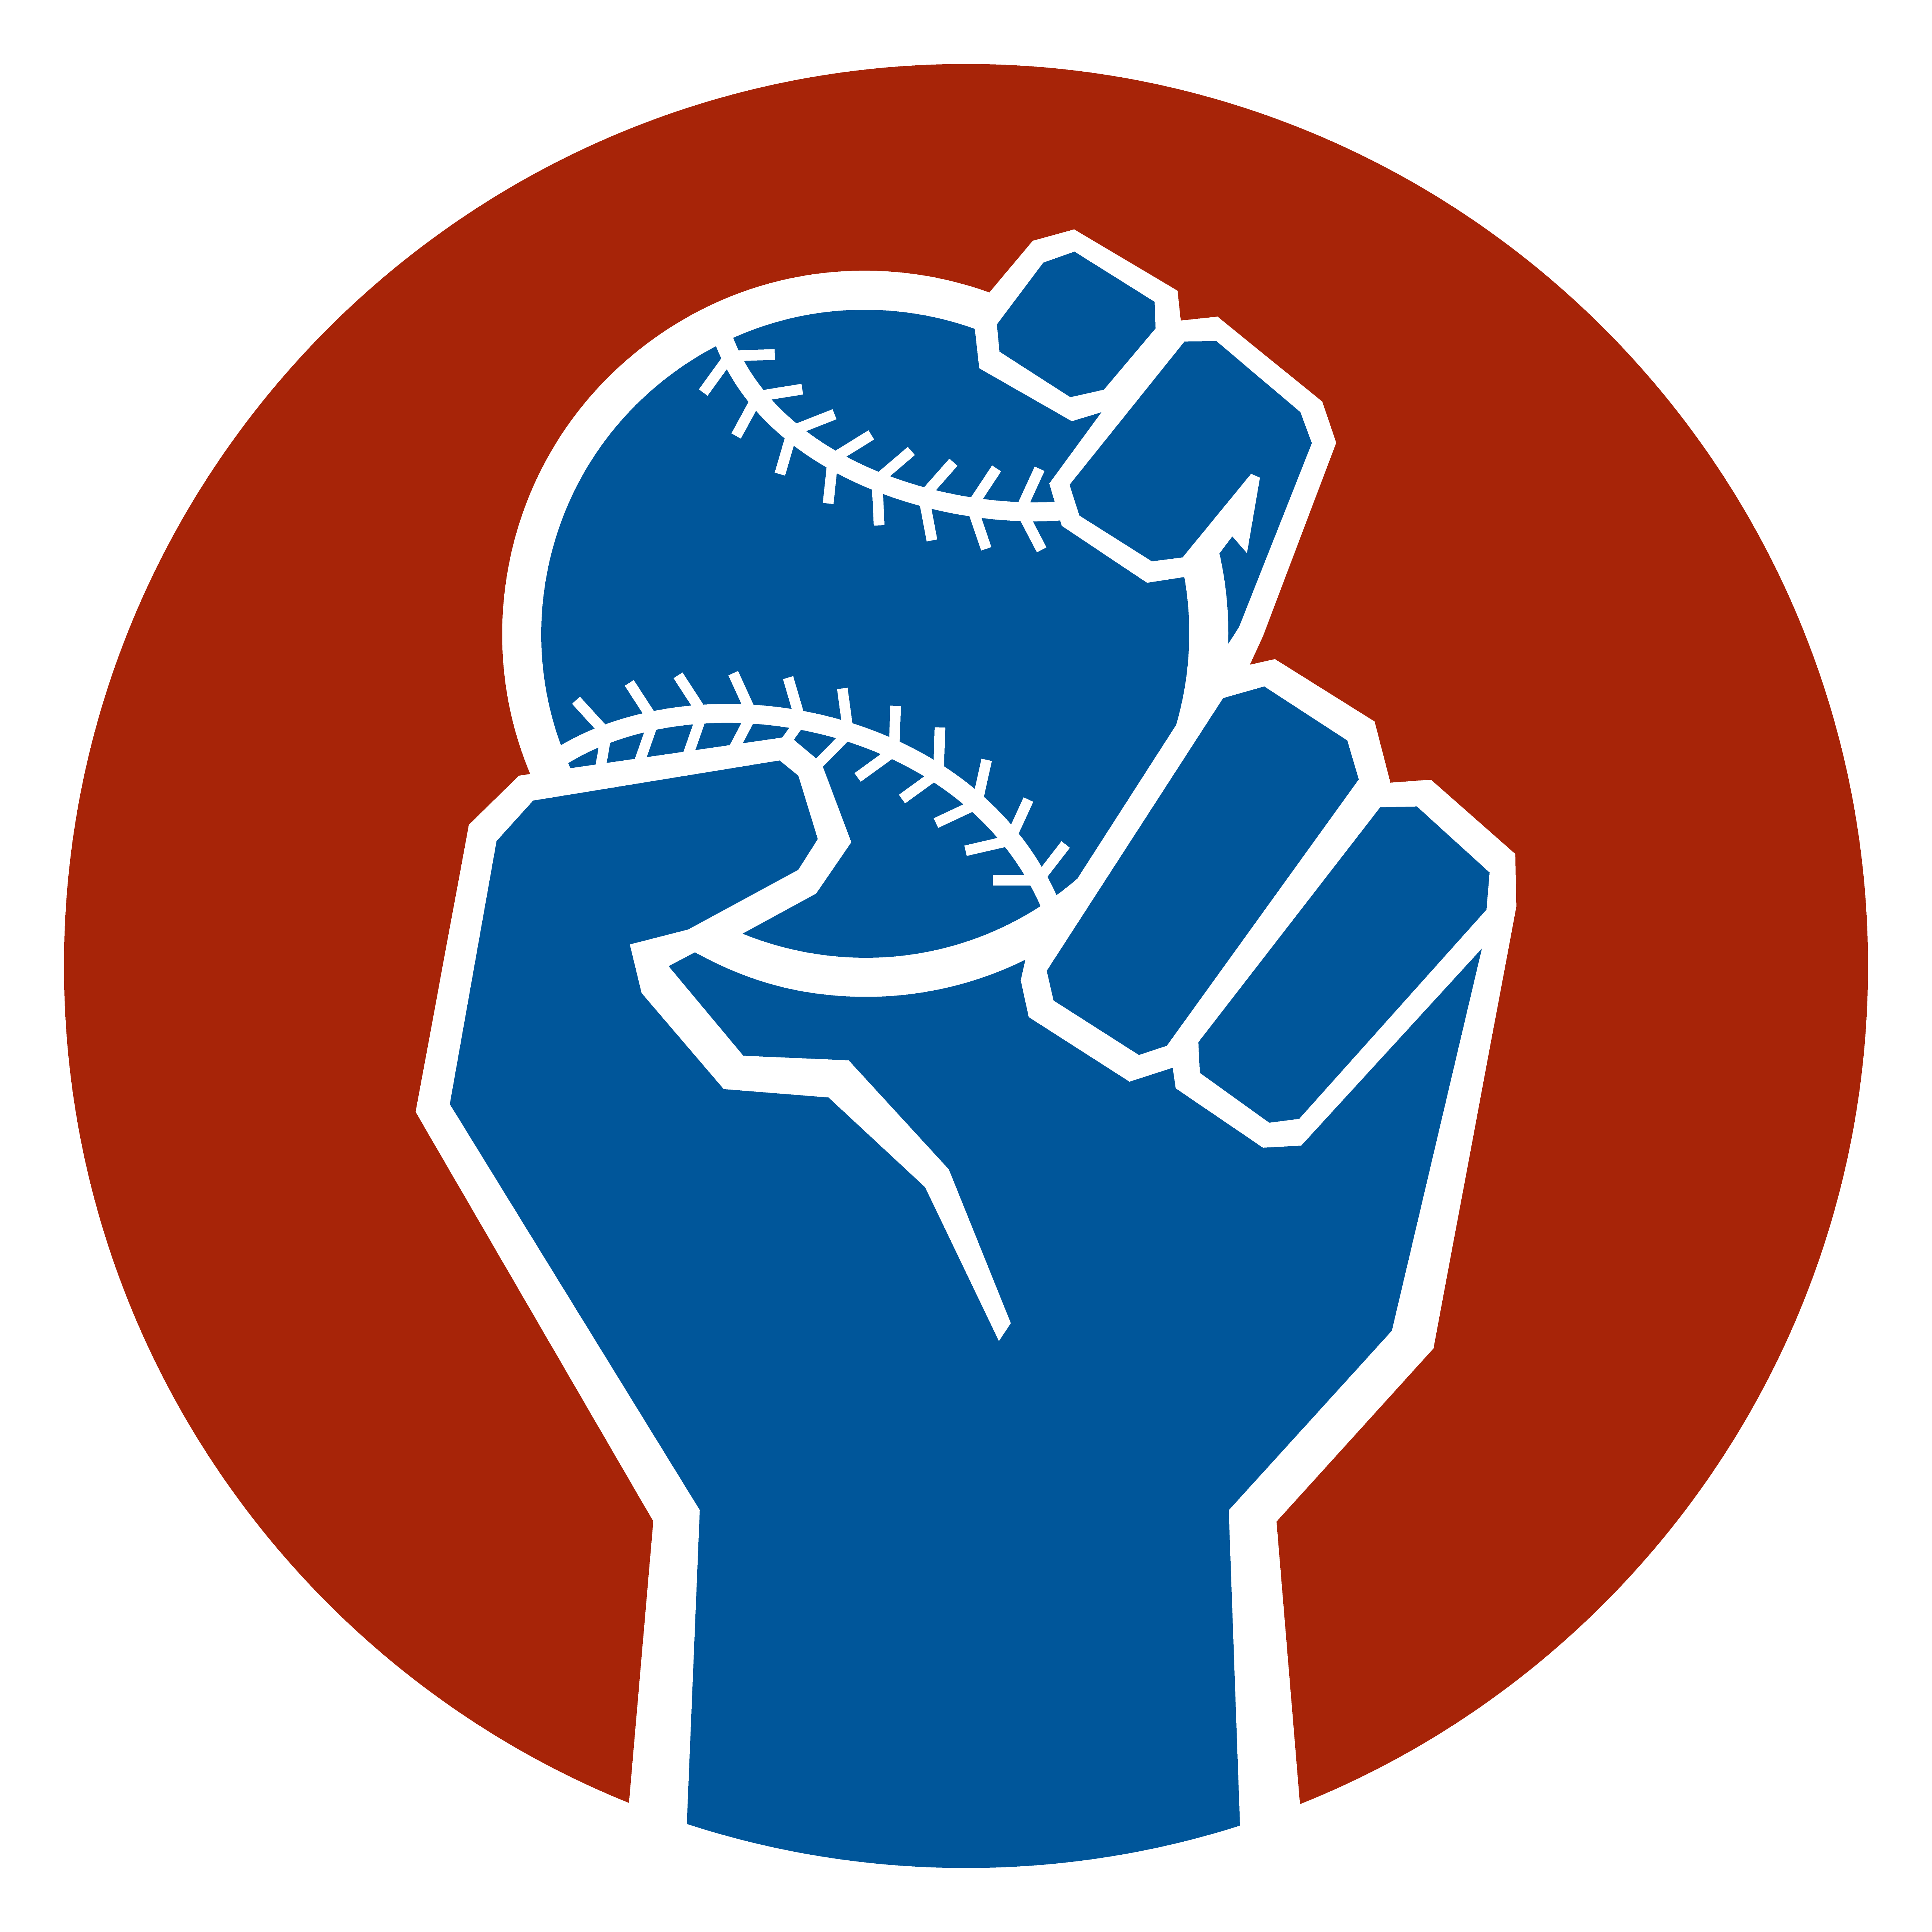 The People's Baseball League